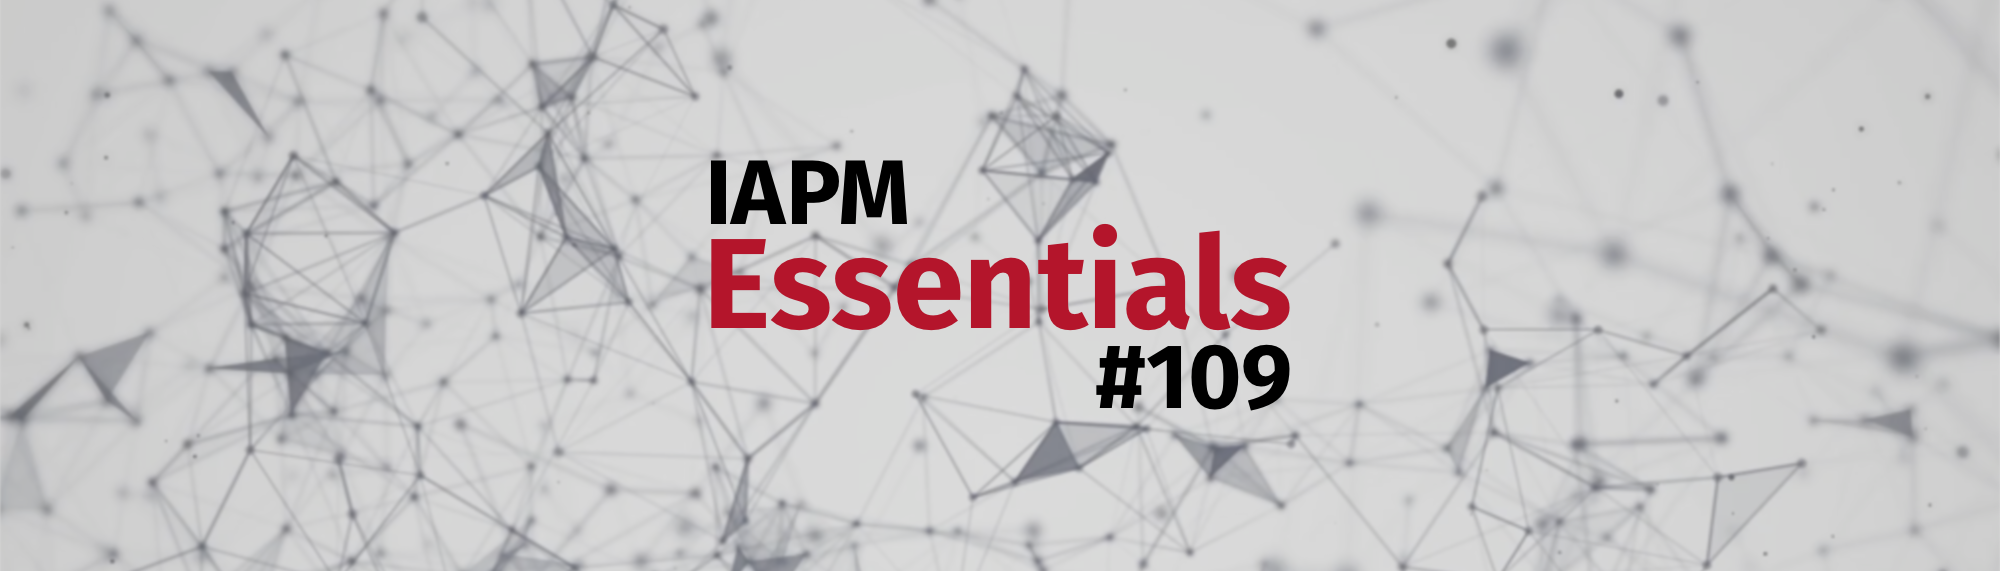 IAPM Essentials #109 - PM Neuigkeiten | IAPM